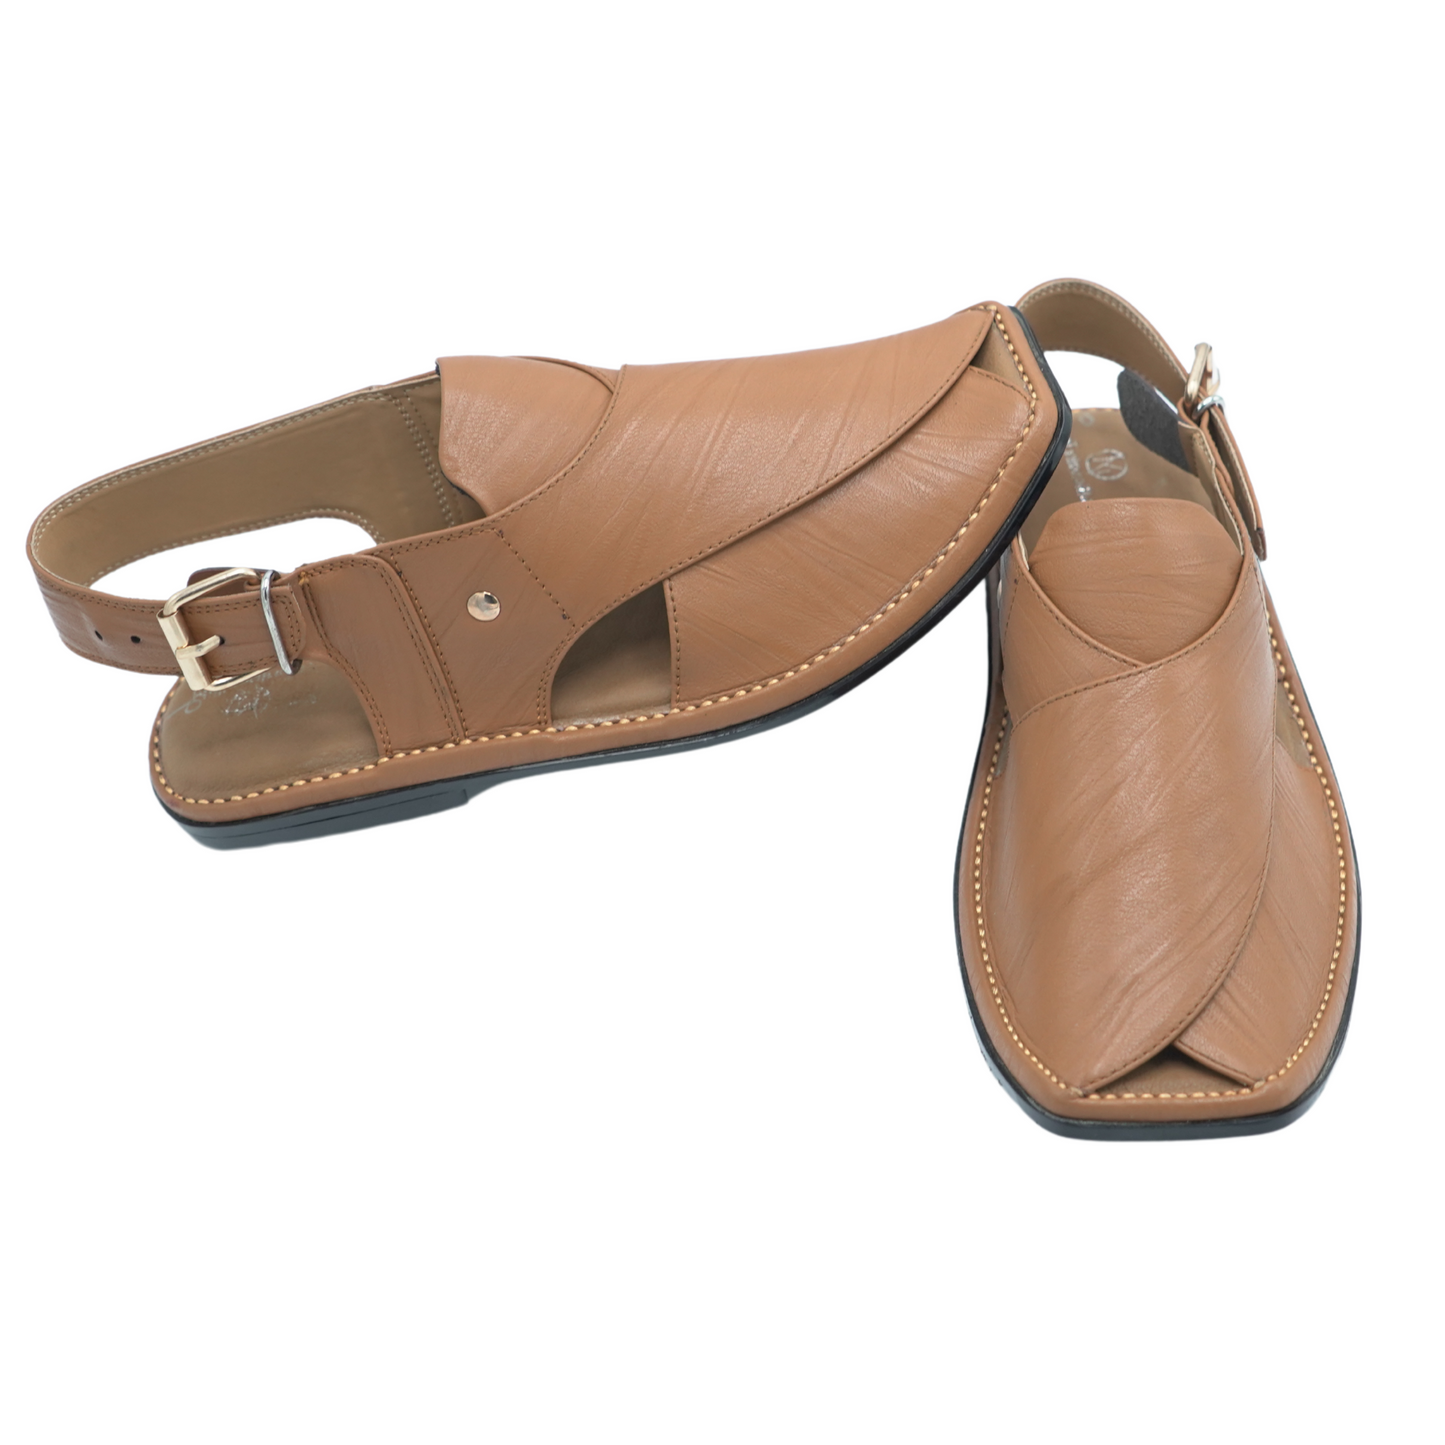 New Unique Design Handcrafted Camel Brown Leather Peshawari Sandal